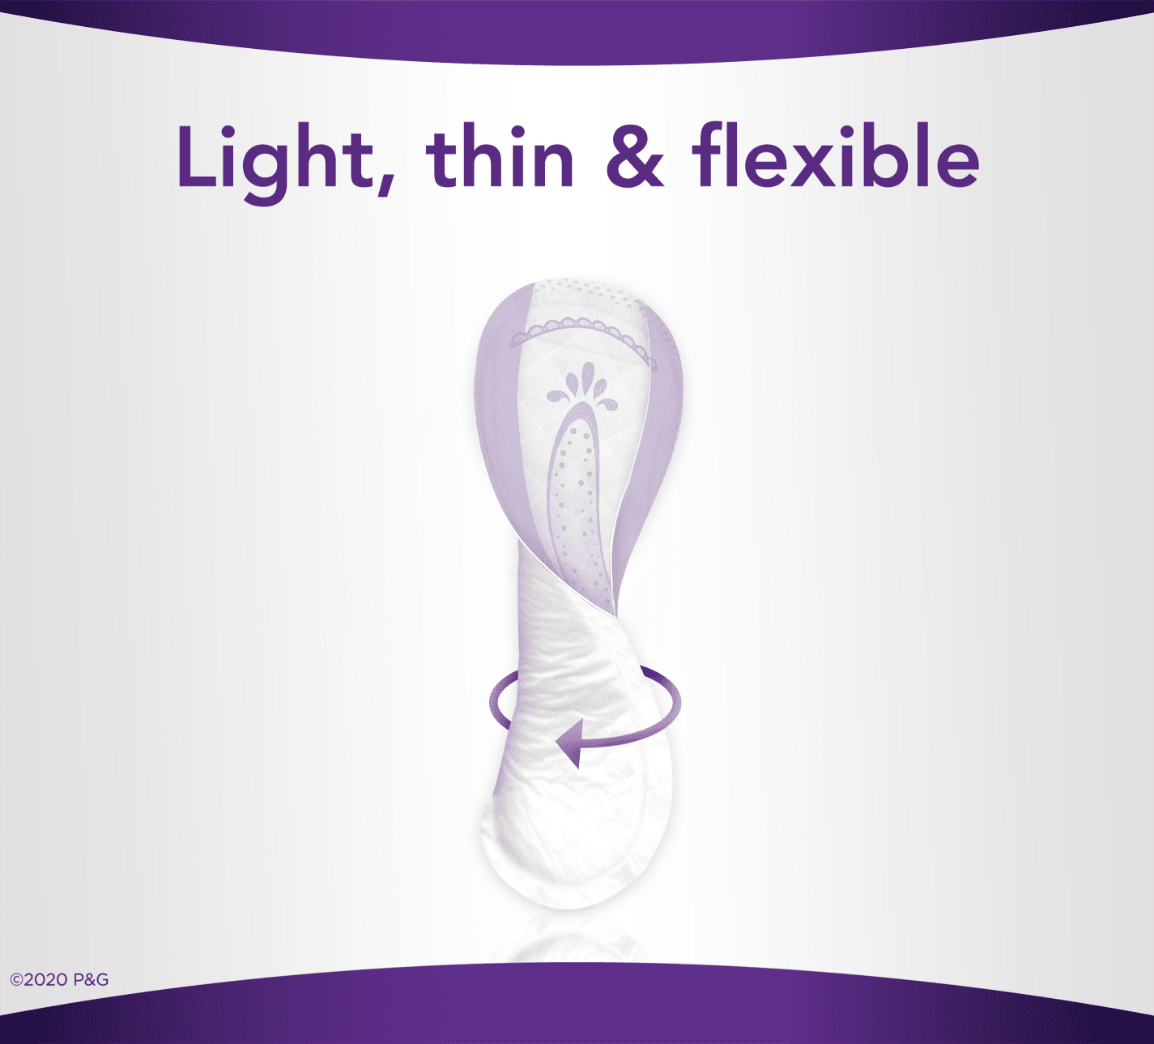 Light, thin & flexible